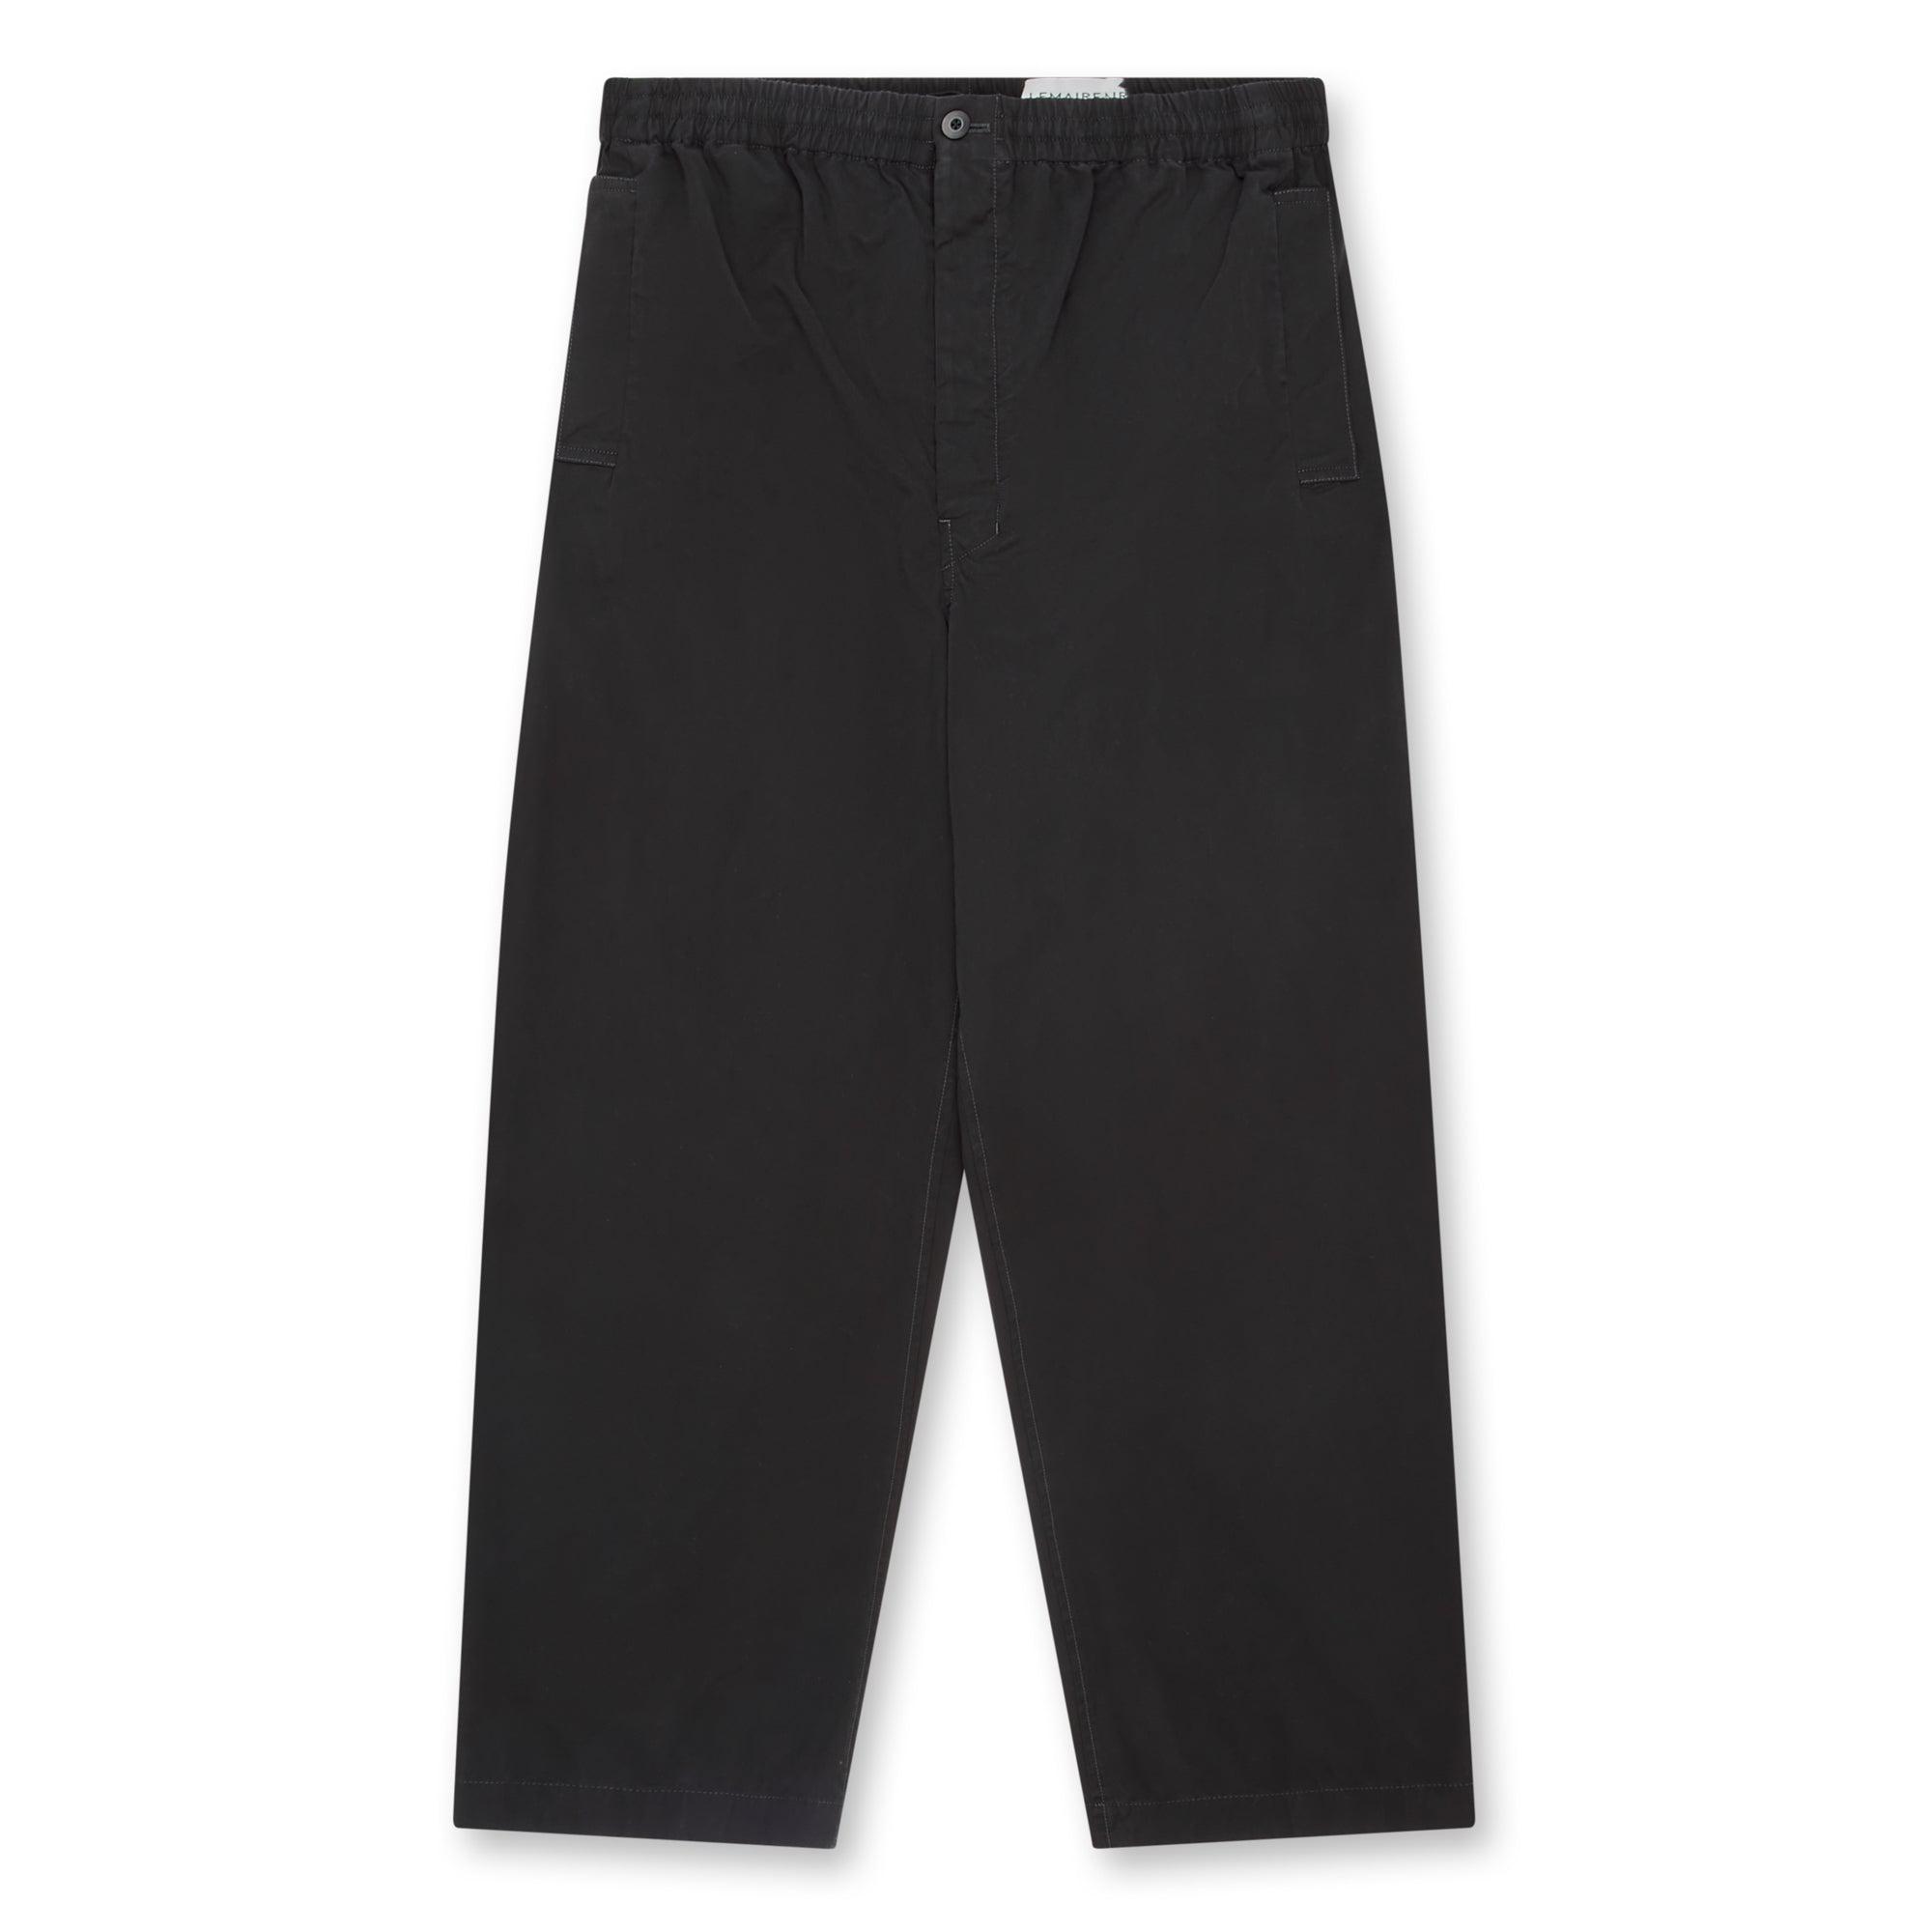 Lemaire Men's Casual Pants (Black) by LEMAIRE